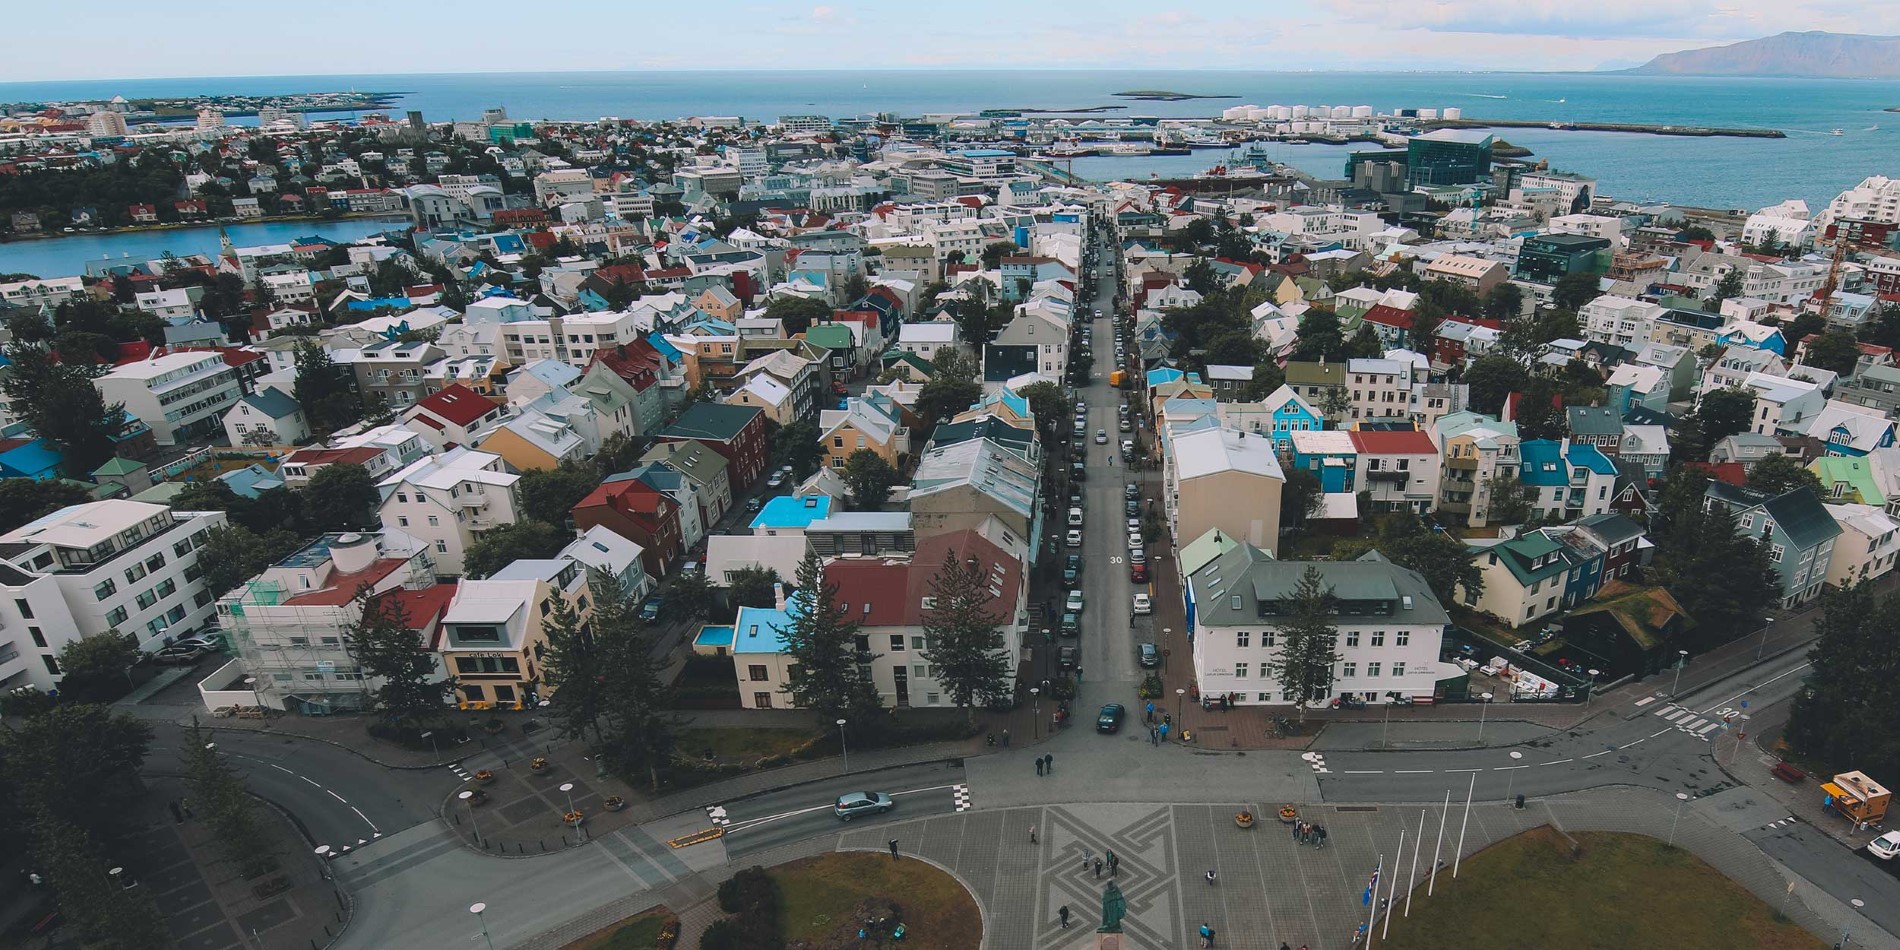 Reykjavik Iceland from above